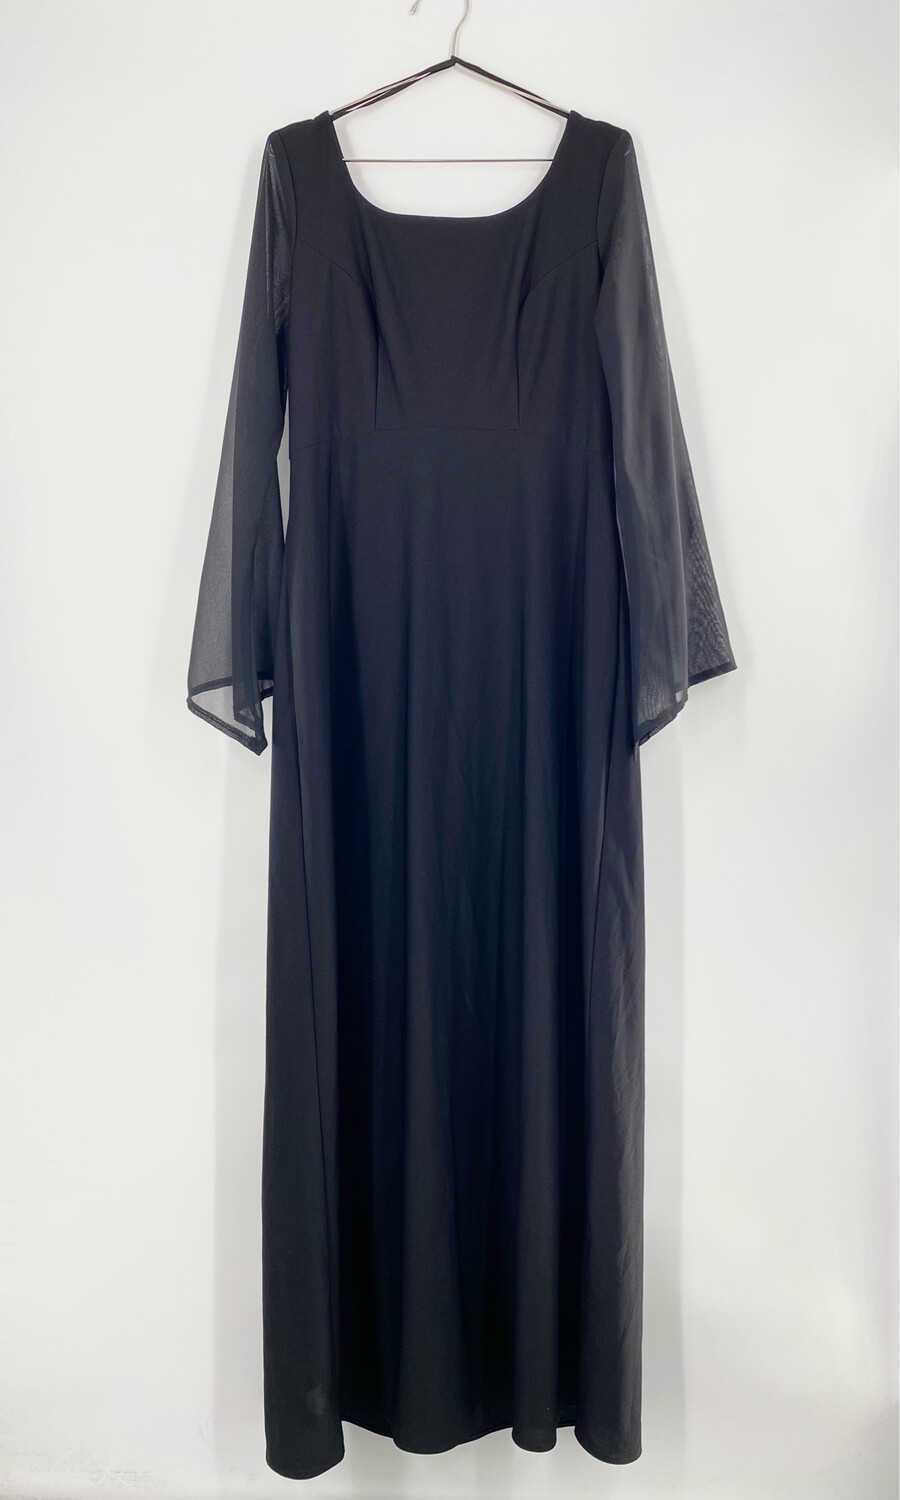 Southeastern Long Sleeve Vintage Dress Size M